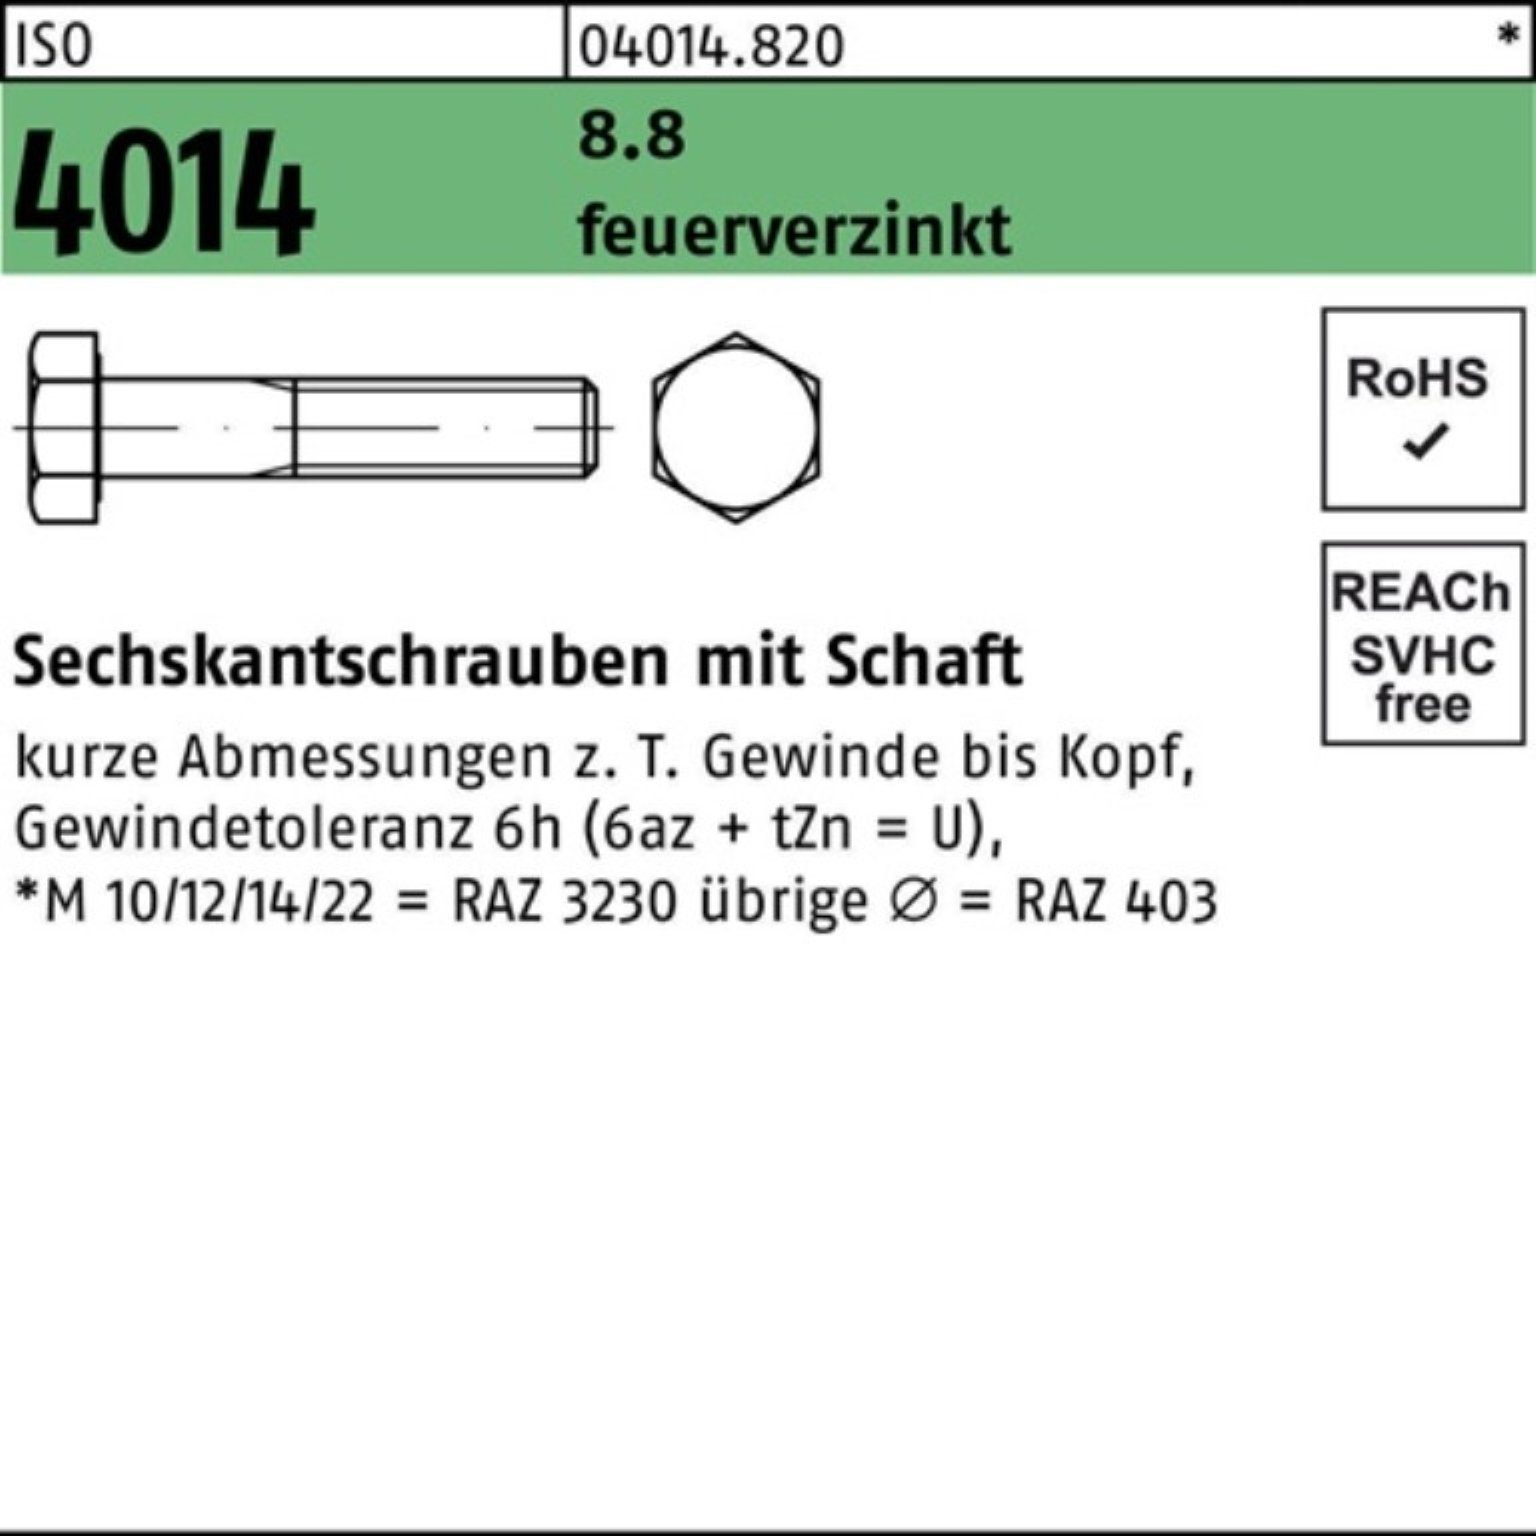 Reyher Sechskantschraube 100er Pack Sechskantschraube M16x 190 8.8 ISO feuerverz. 4014 U Schaft